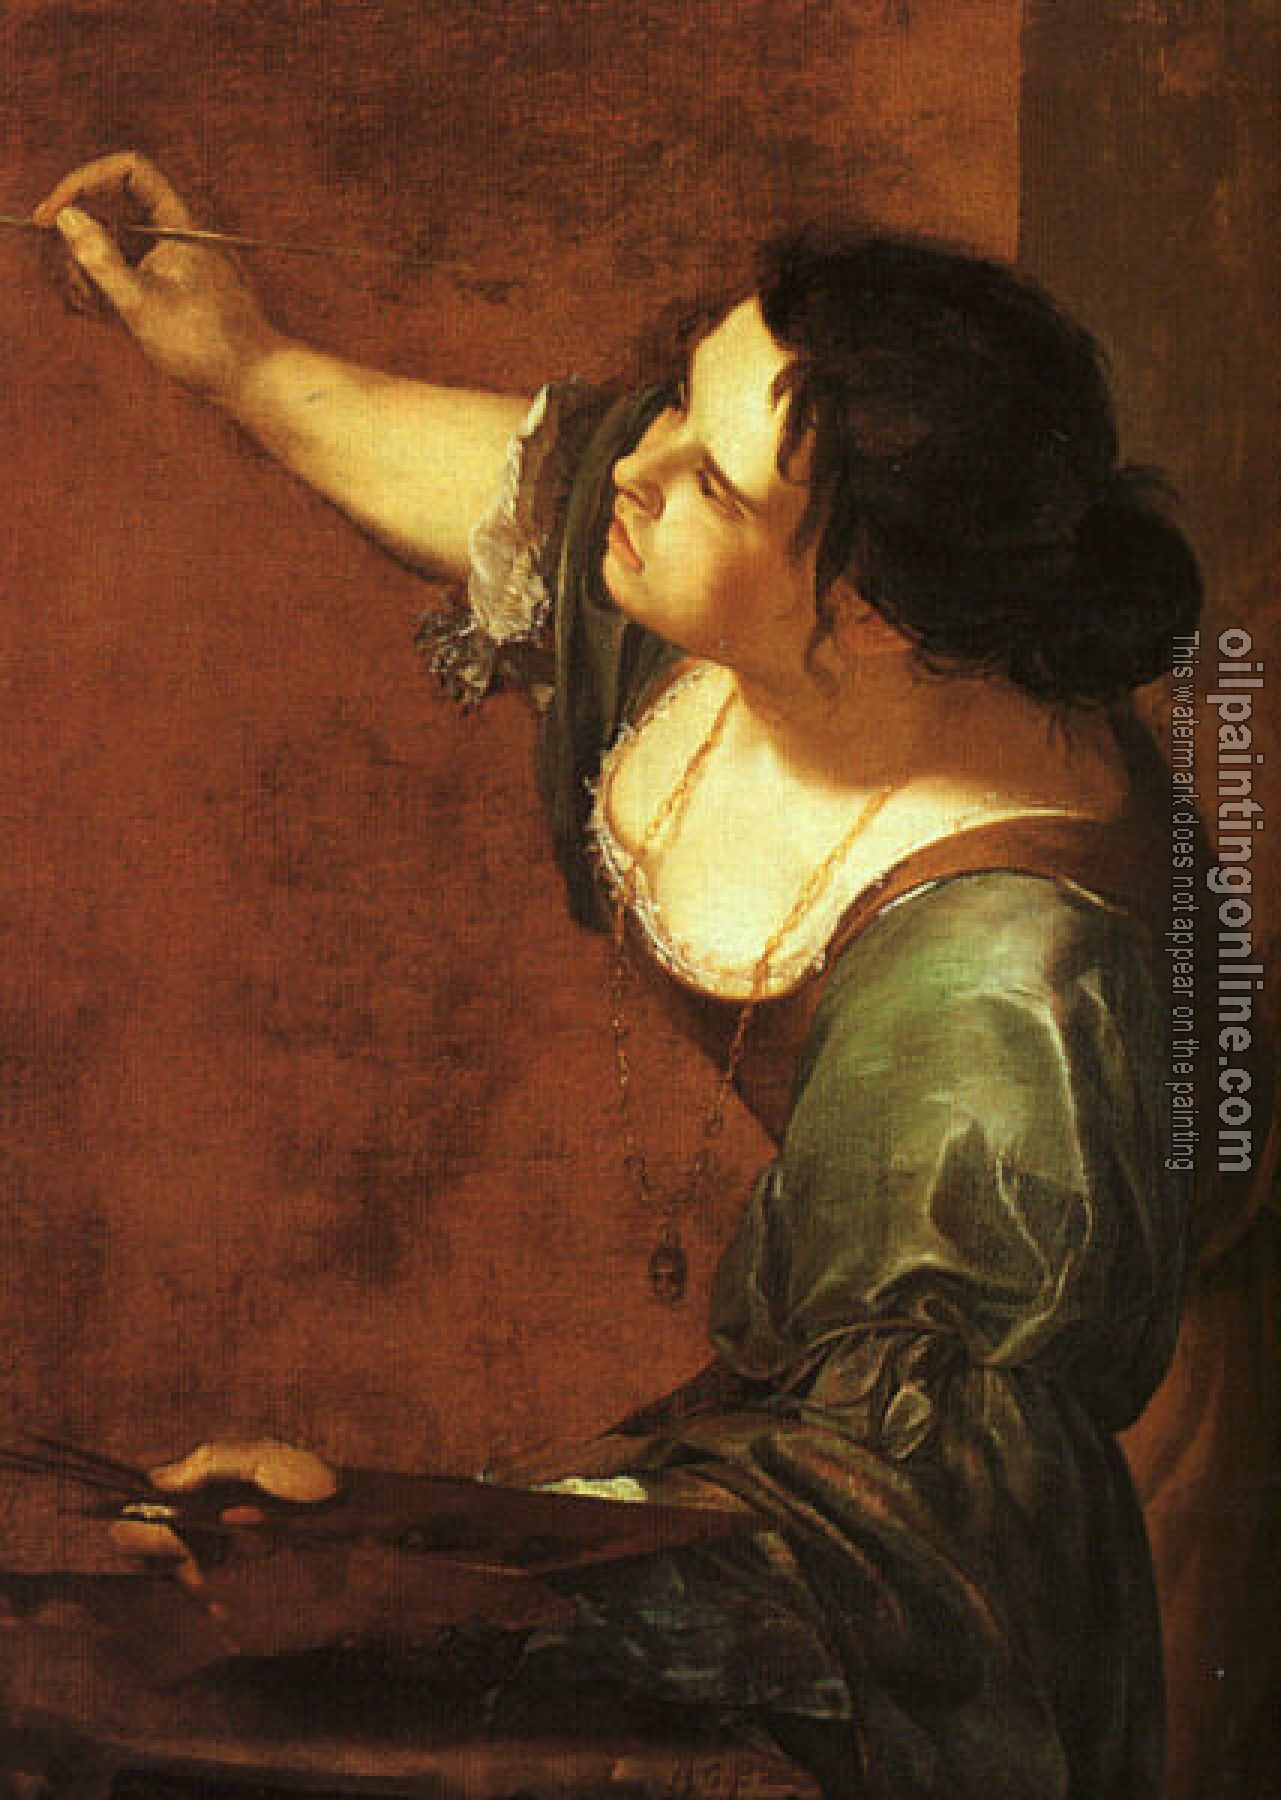 Gentileschi, Artemisia - Self-Portrait as the Allegory of Painting